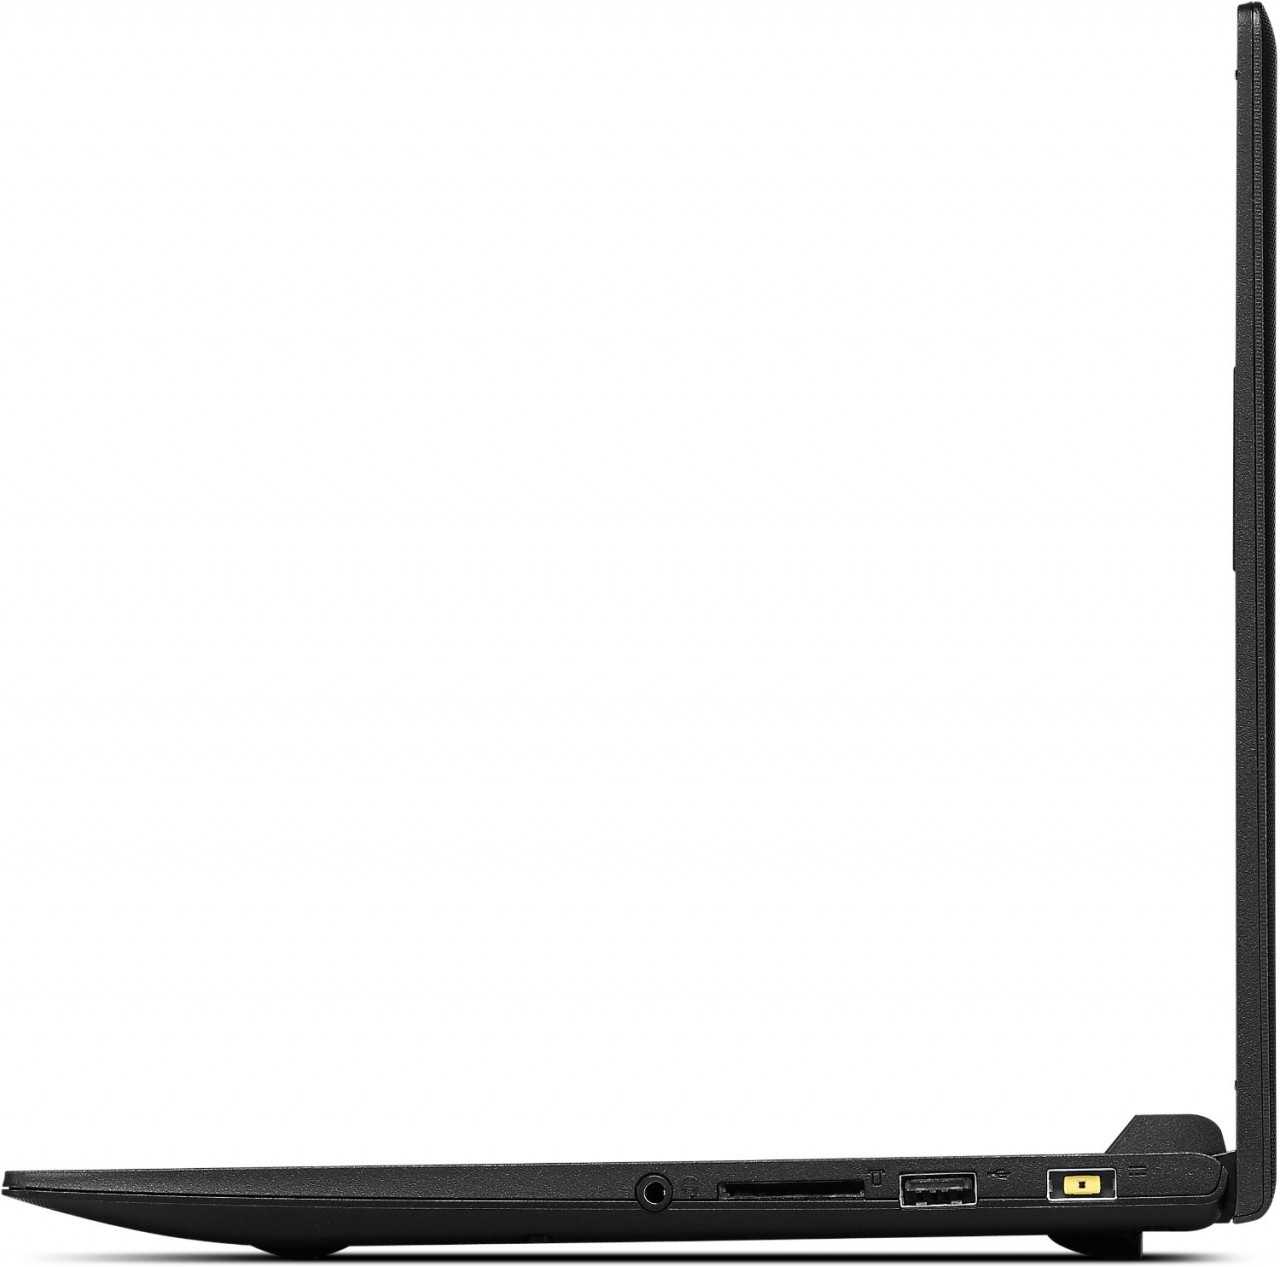 Lenovo IdeaPad S20-30 - 11.6" HD Intel Dual Core 2GB 500G